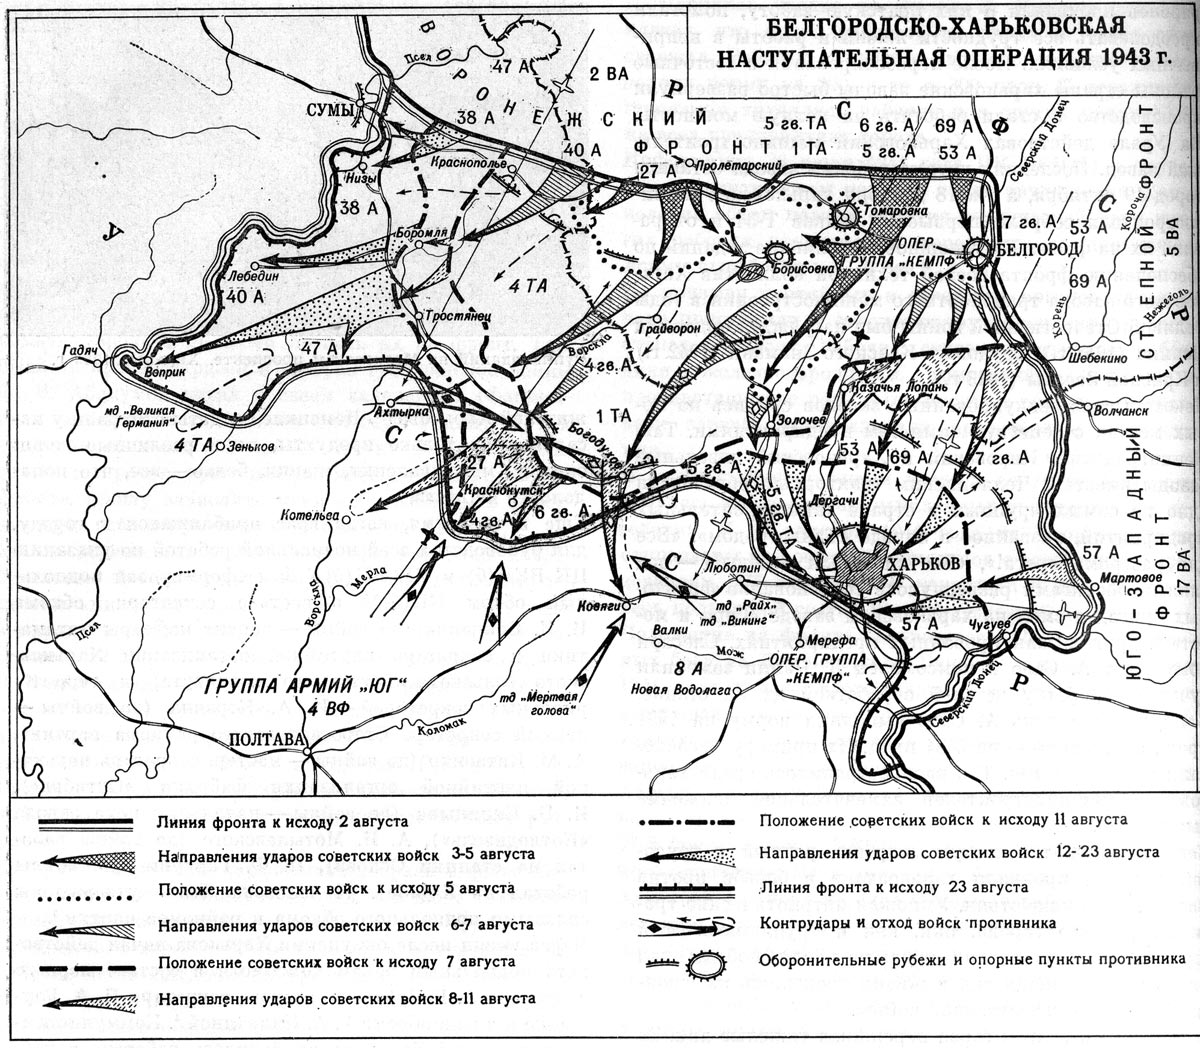 Бои за Харьков в августе 1943 года